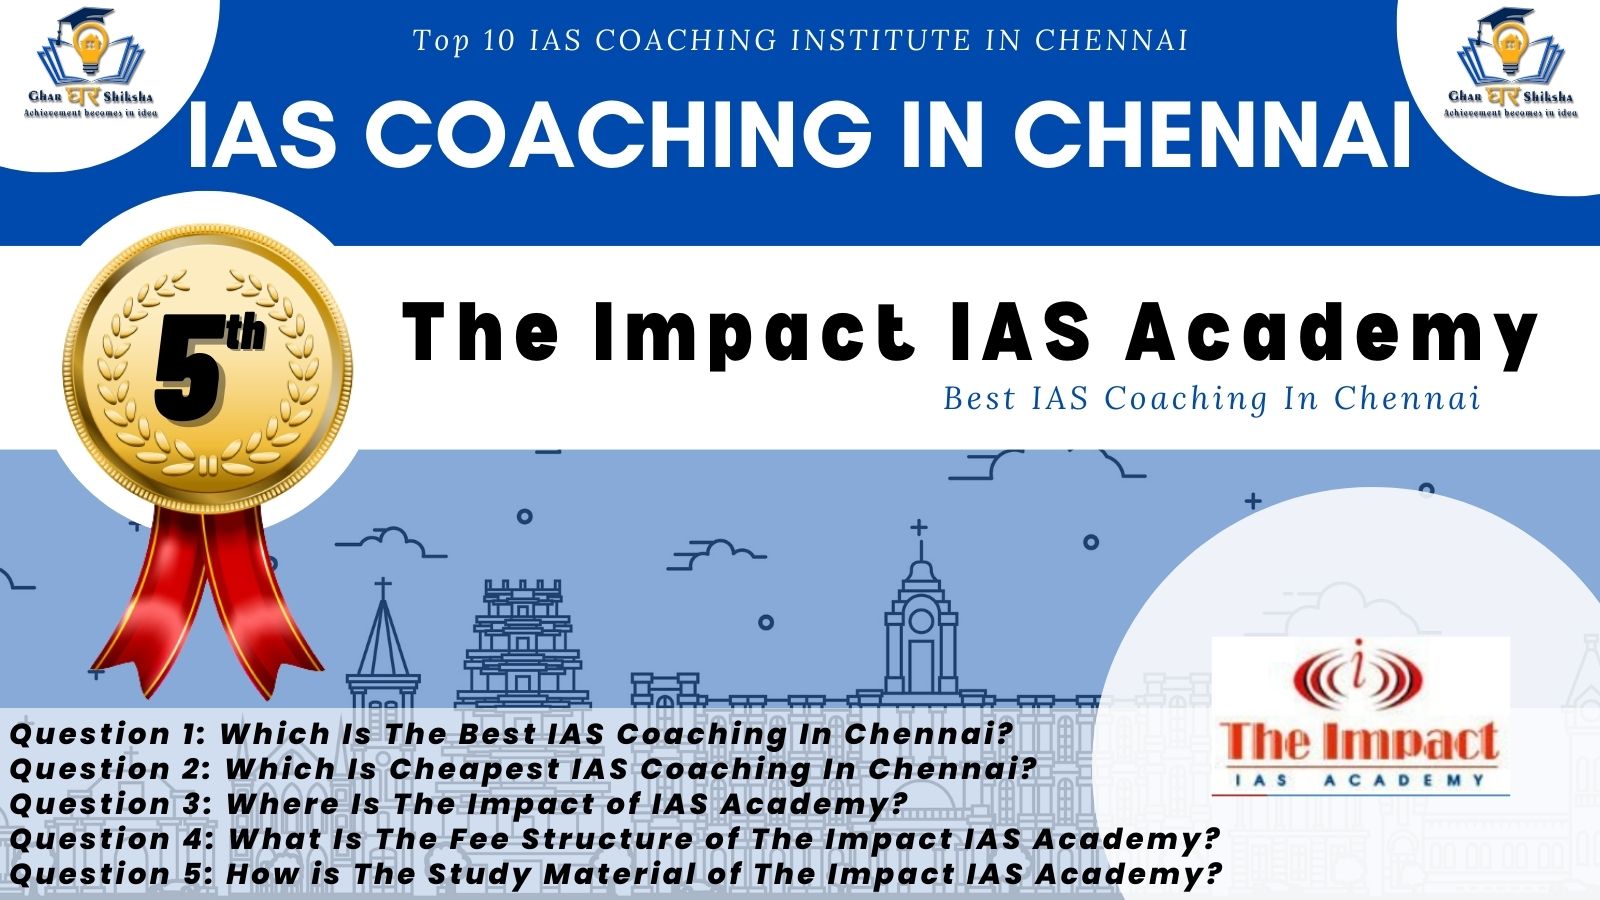 The Impact IAS Academy Best IAS Coaching In Chennai